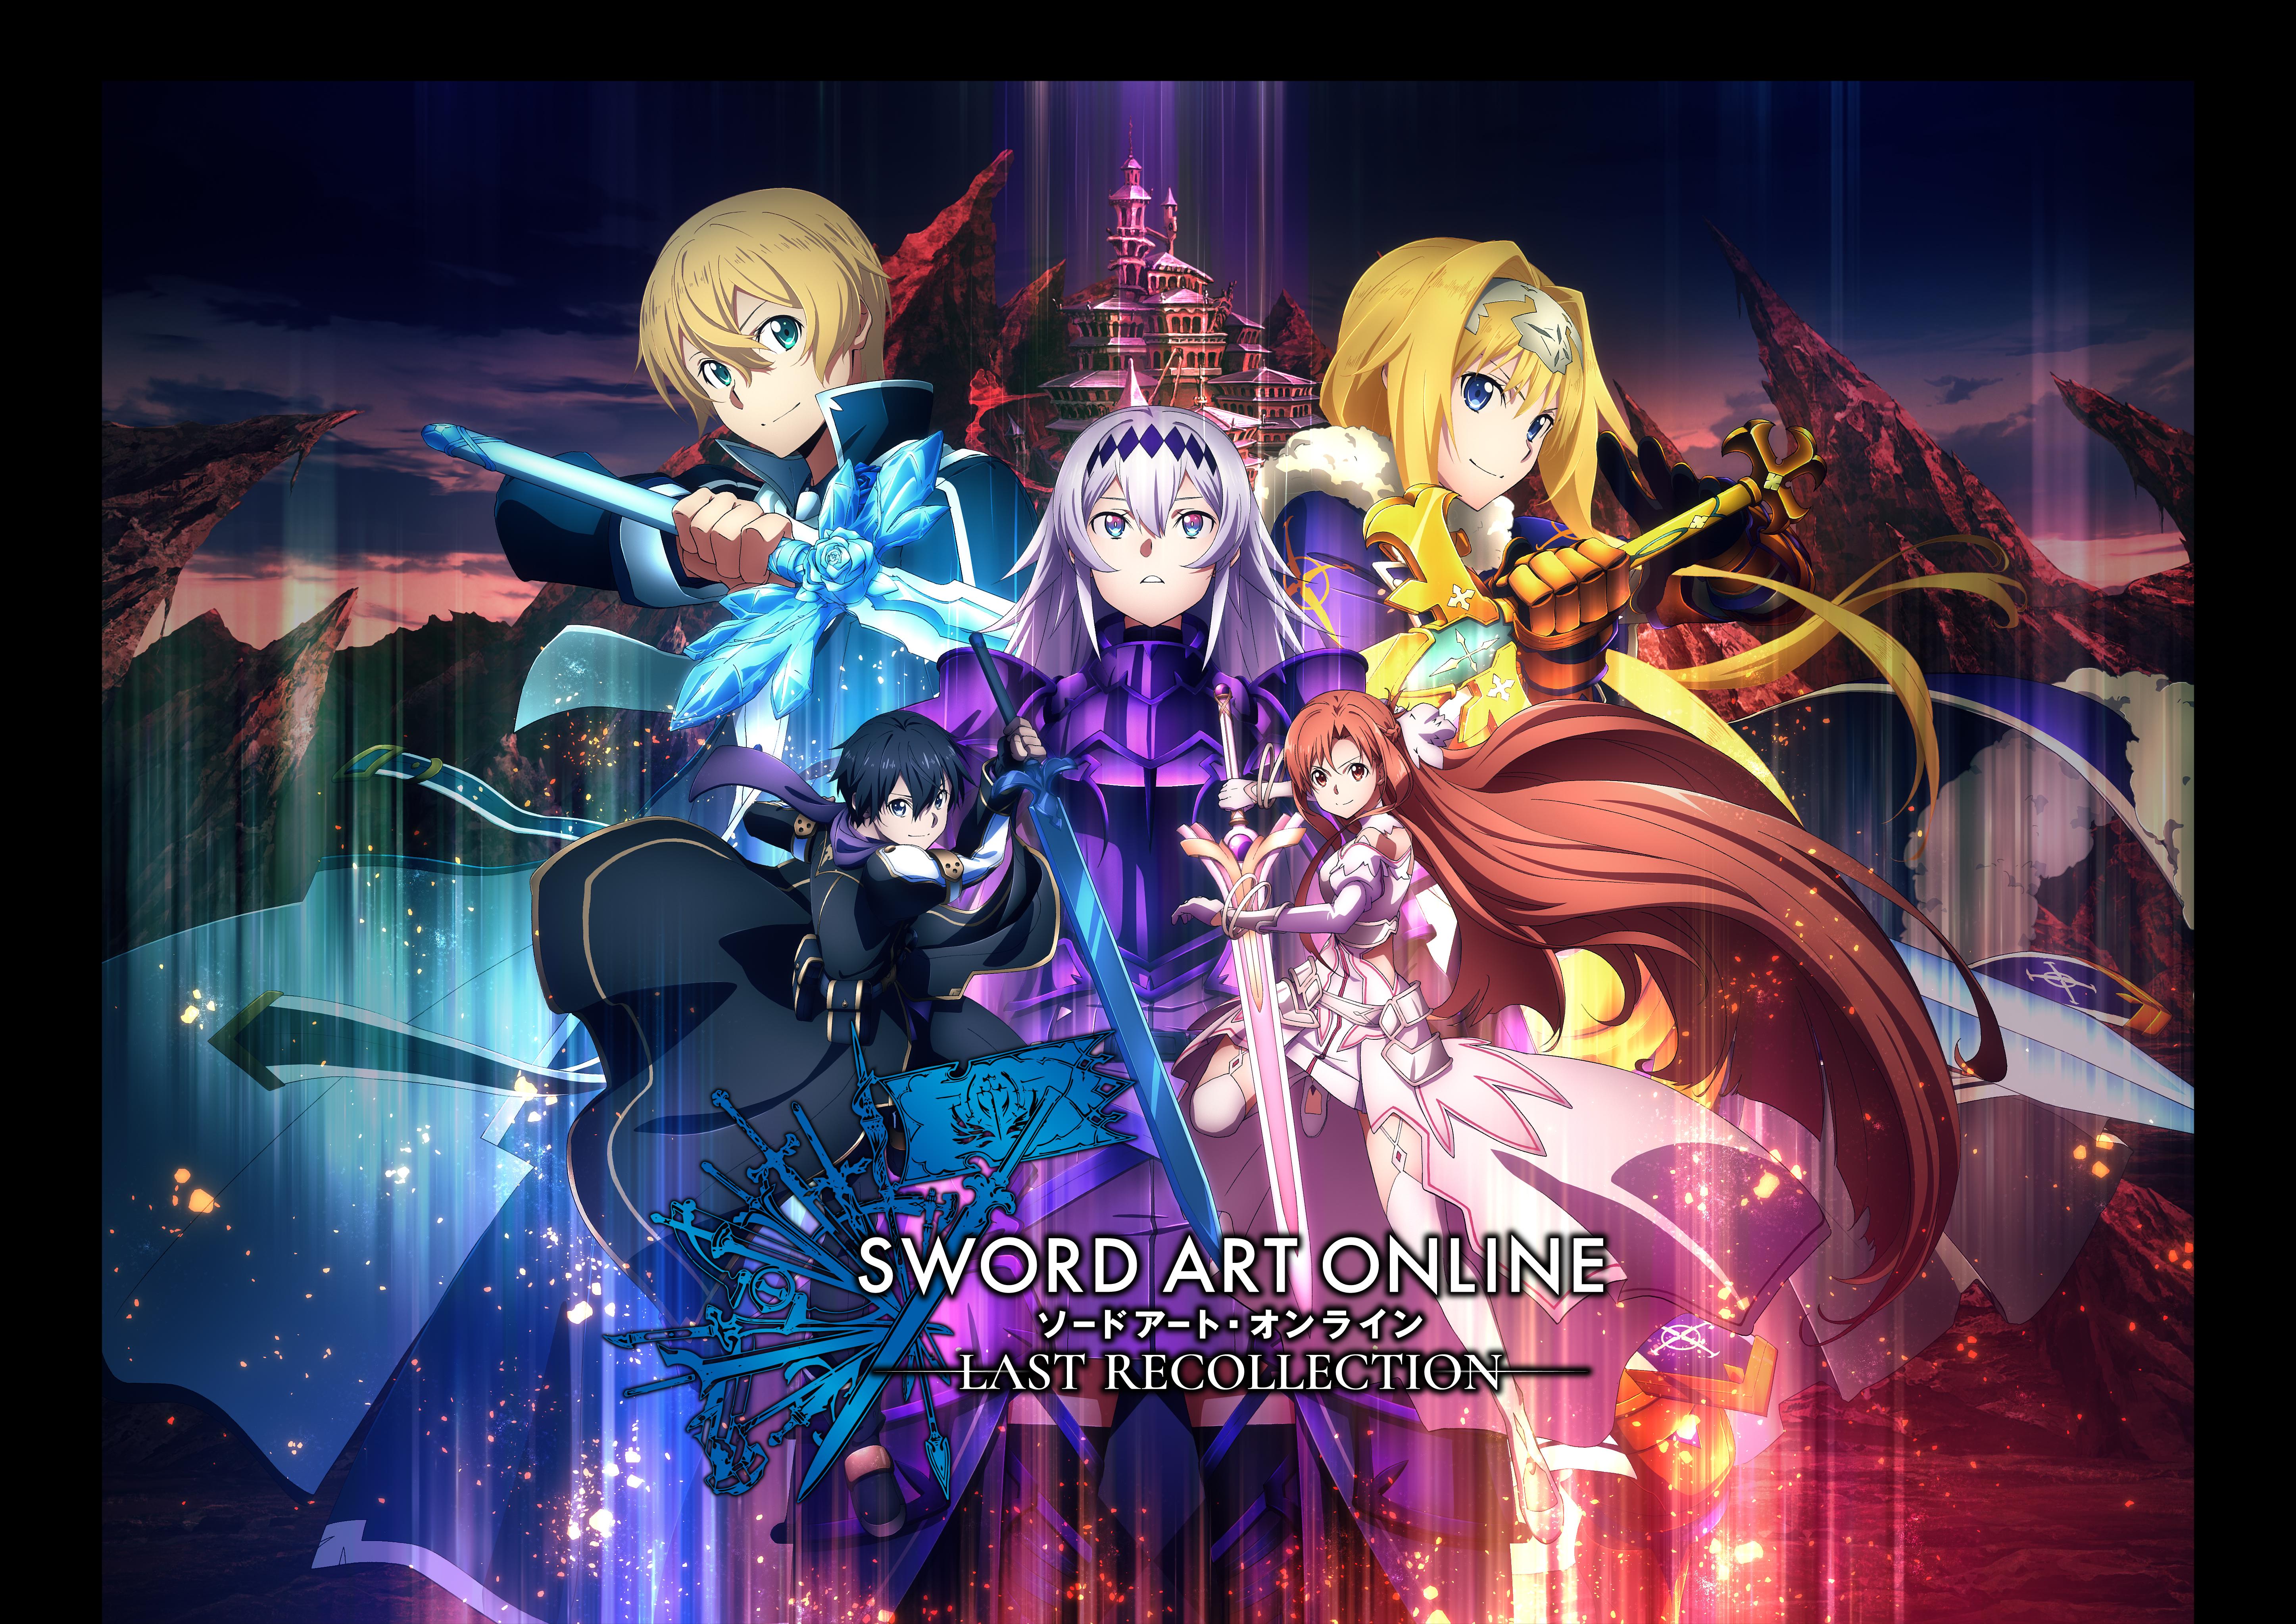 Video Game Sword Art Online Last Recollection 4k Ultra HD Wallpaper